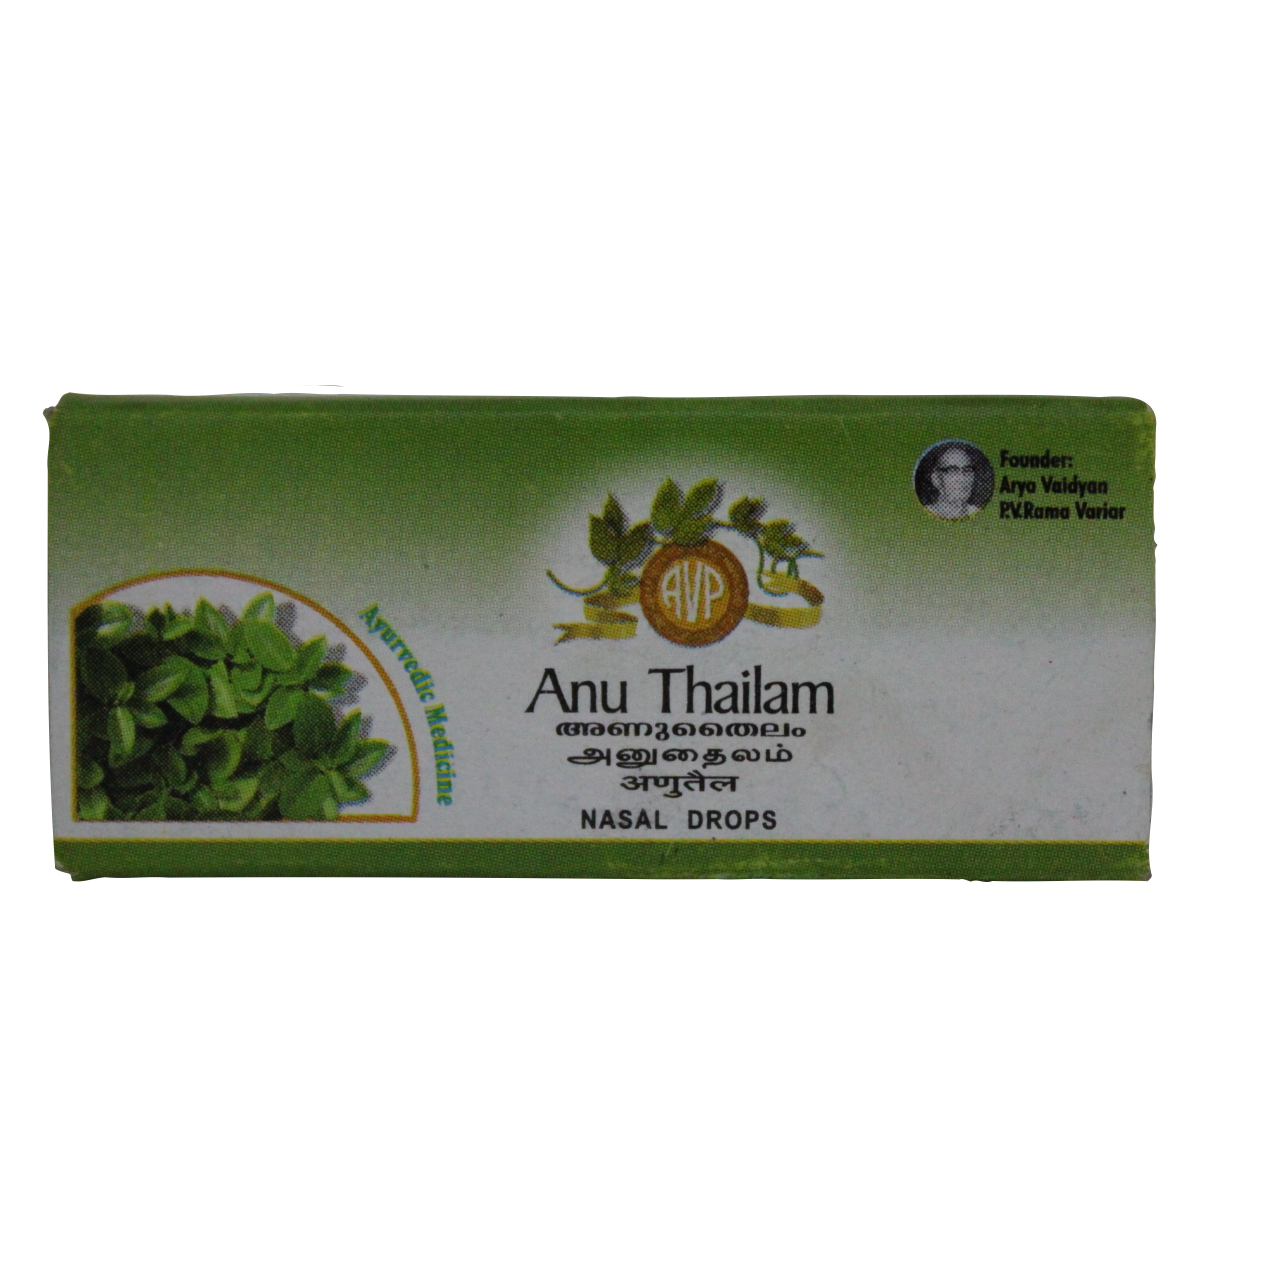 Shop Anu thailam 10ml at price 80.00 from AVP Online - Ayush Care